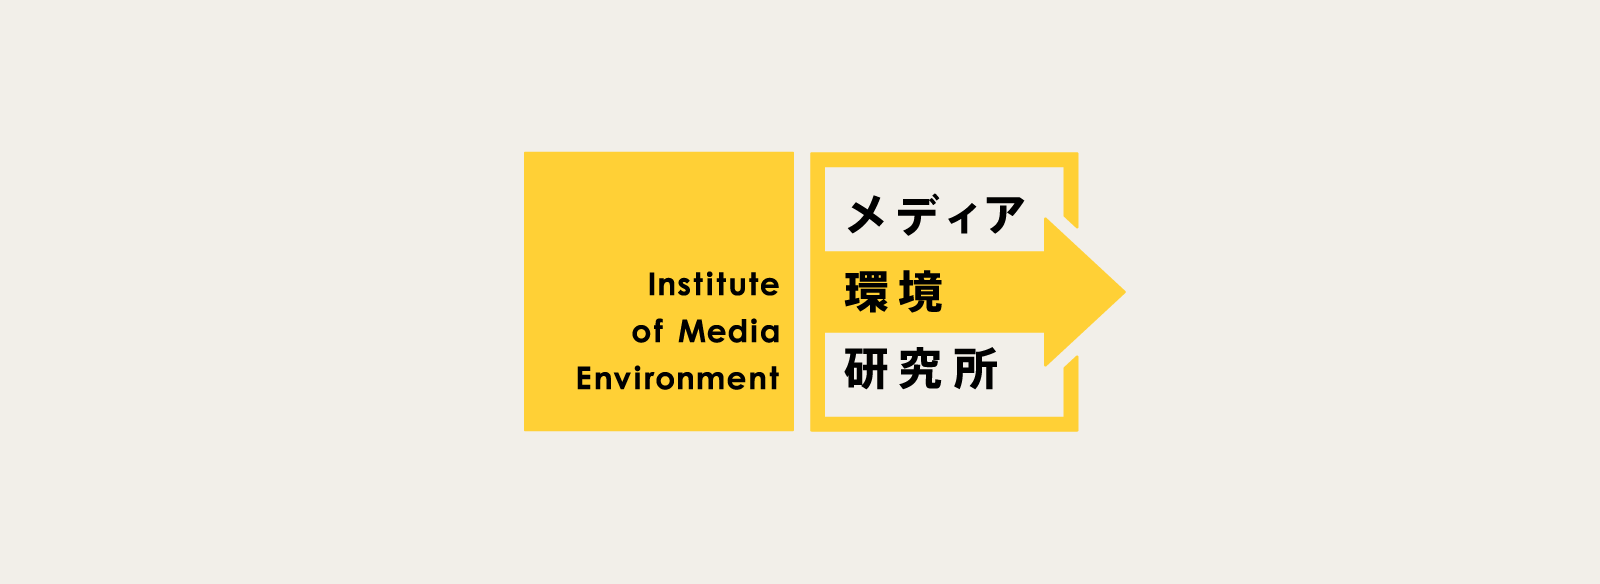 Institute of Media Environment | Hakuhodo DY Media Partners